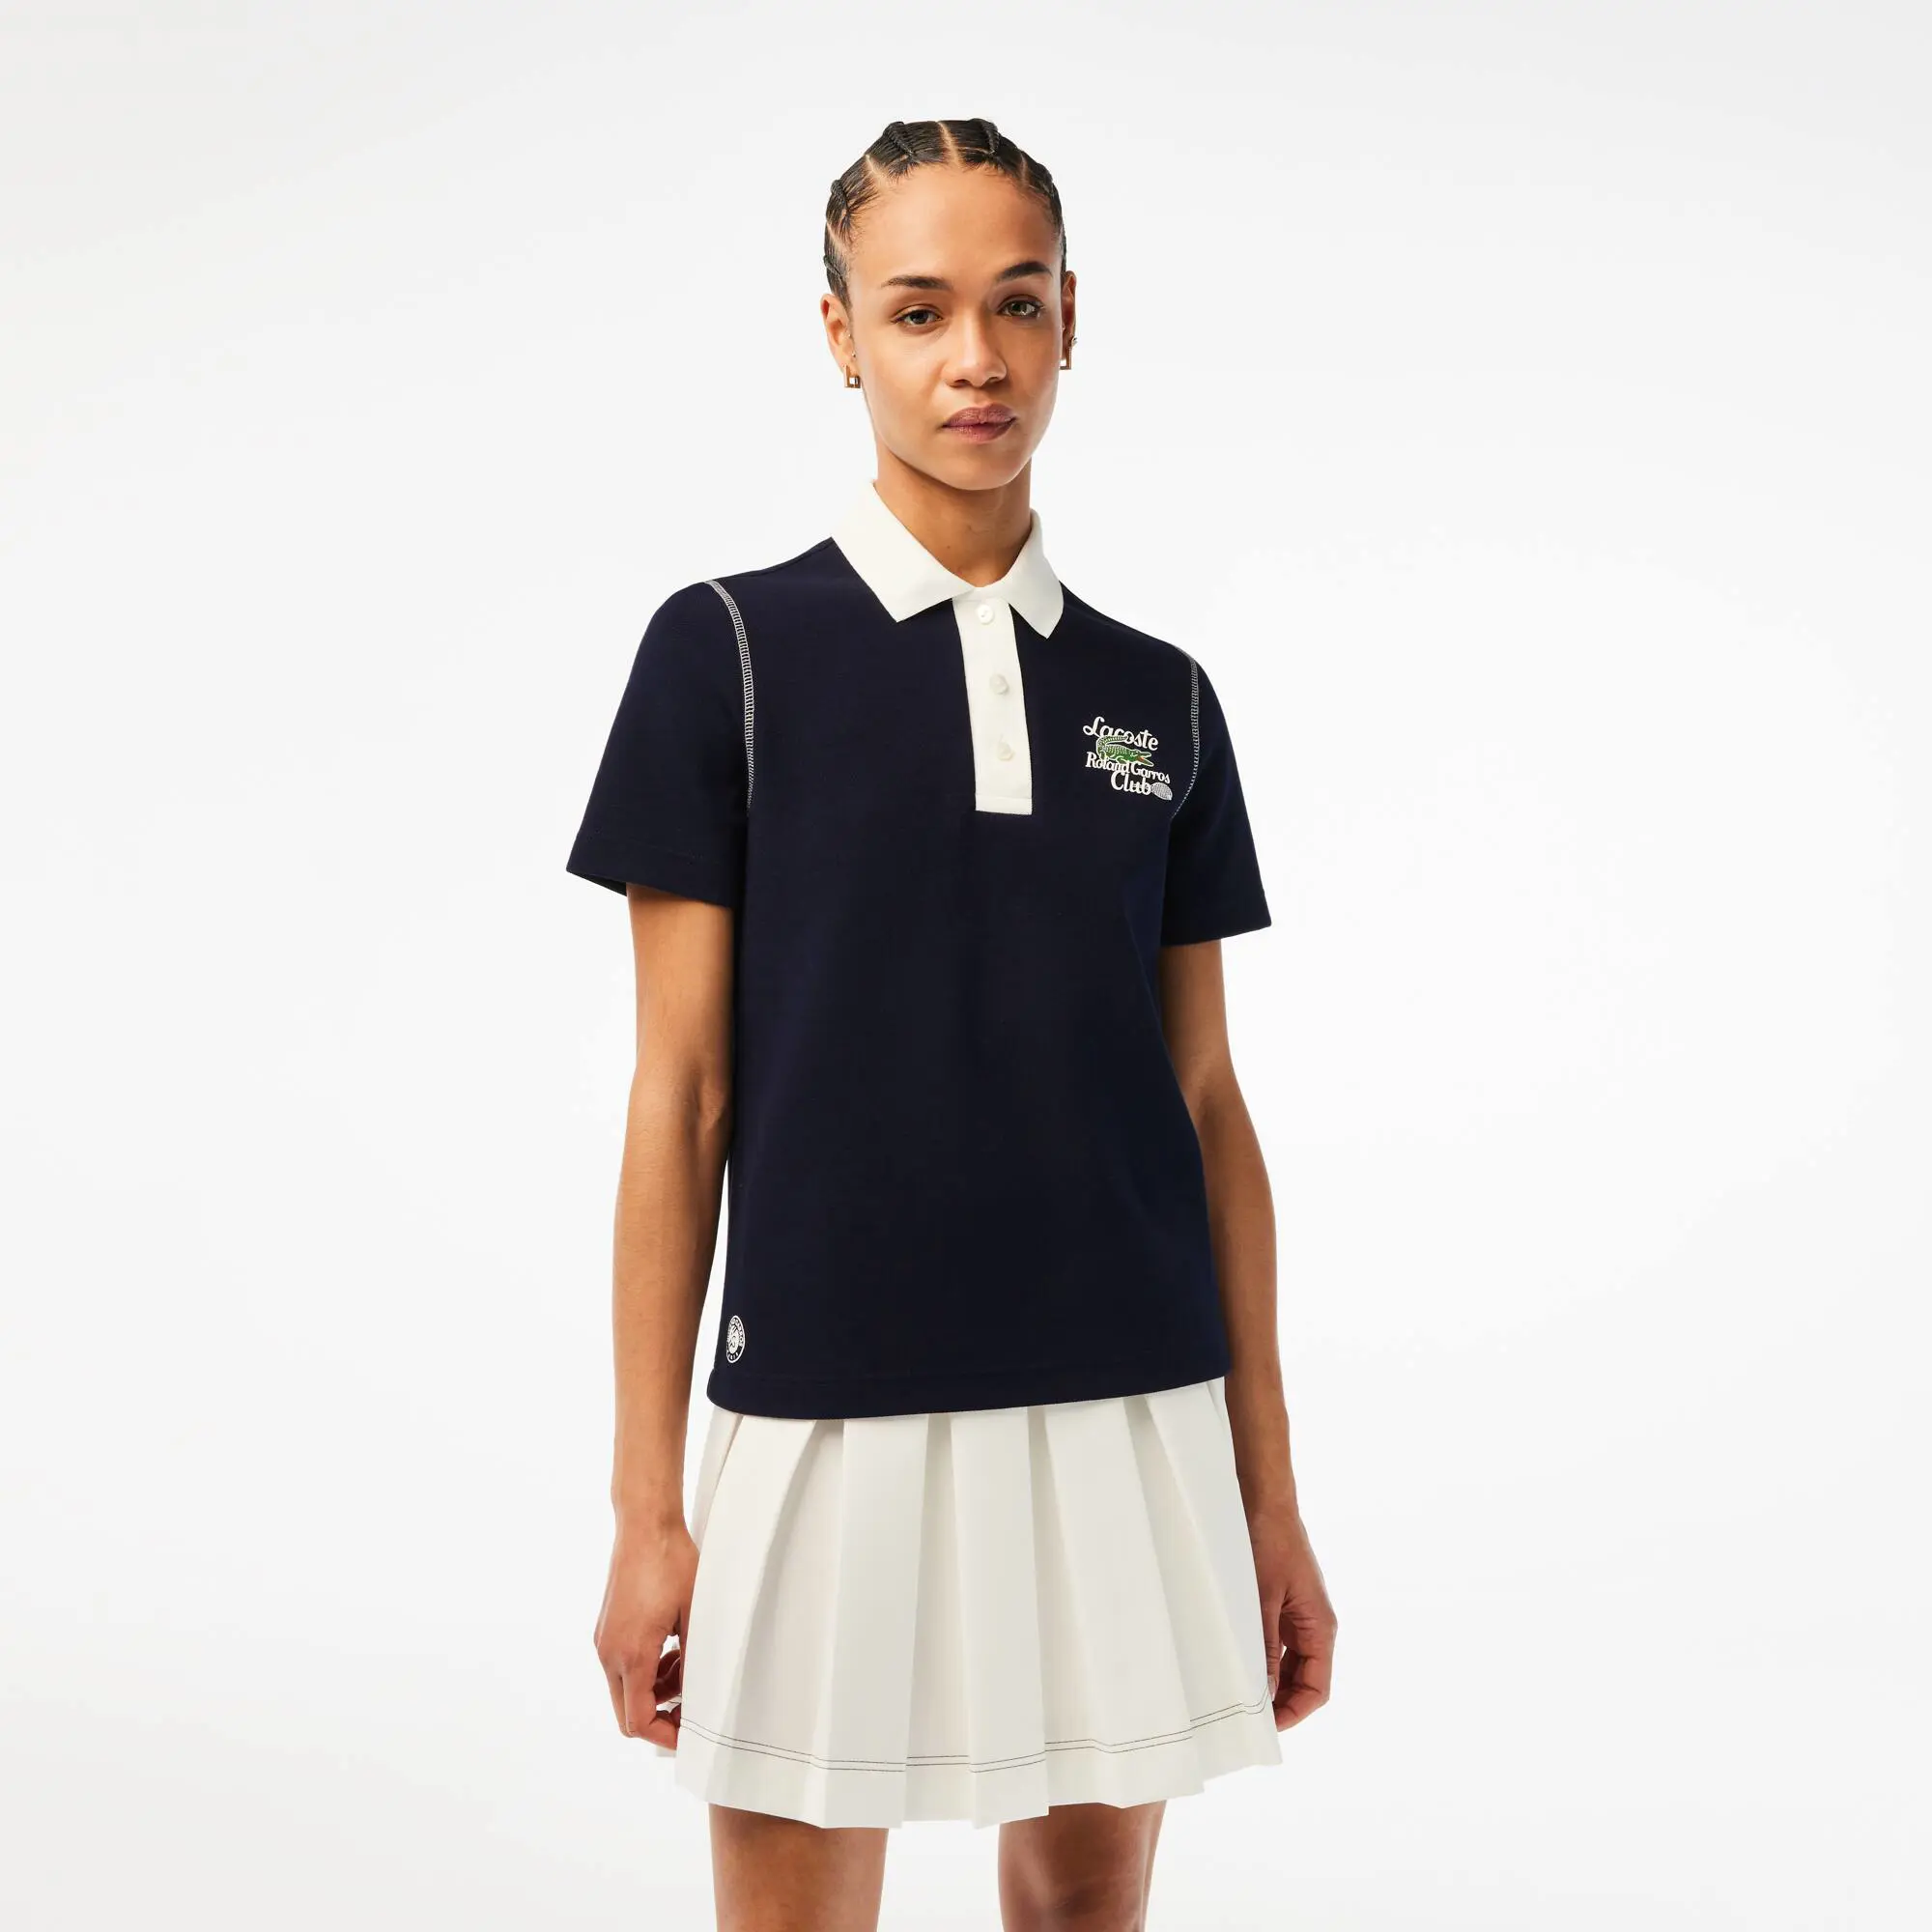 Lacoste Women’s Lacoste Sport Roland Garros Edition Cotton Piqué Polo Shirt. 1